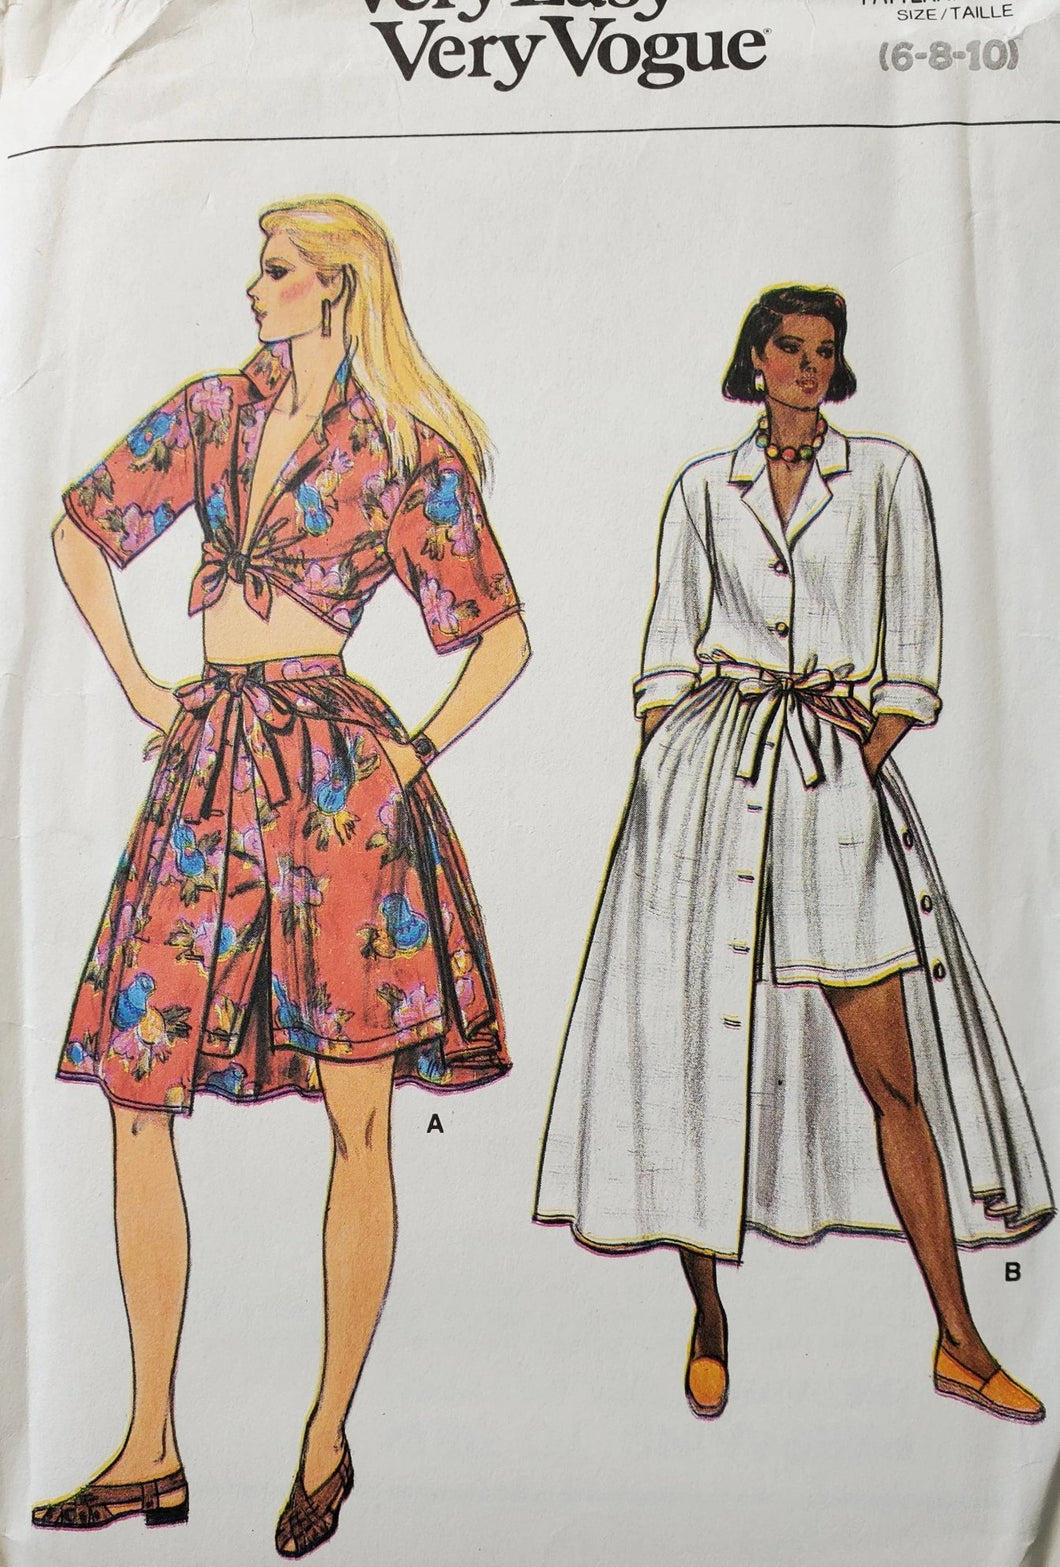 Vogue 9330 UNCUT Dress, Top and Shorts 6-8-10, Rare